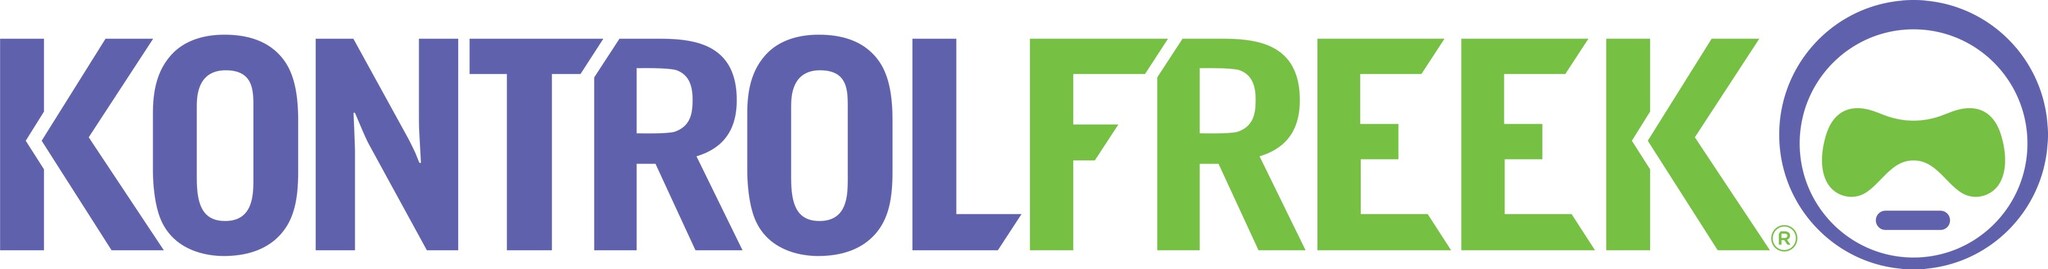 KontrolFreek-logo